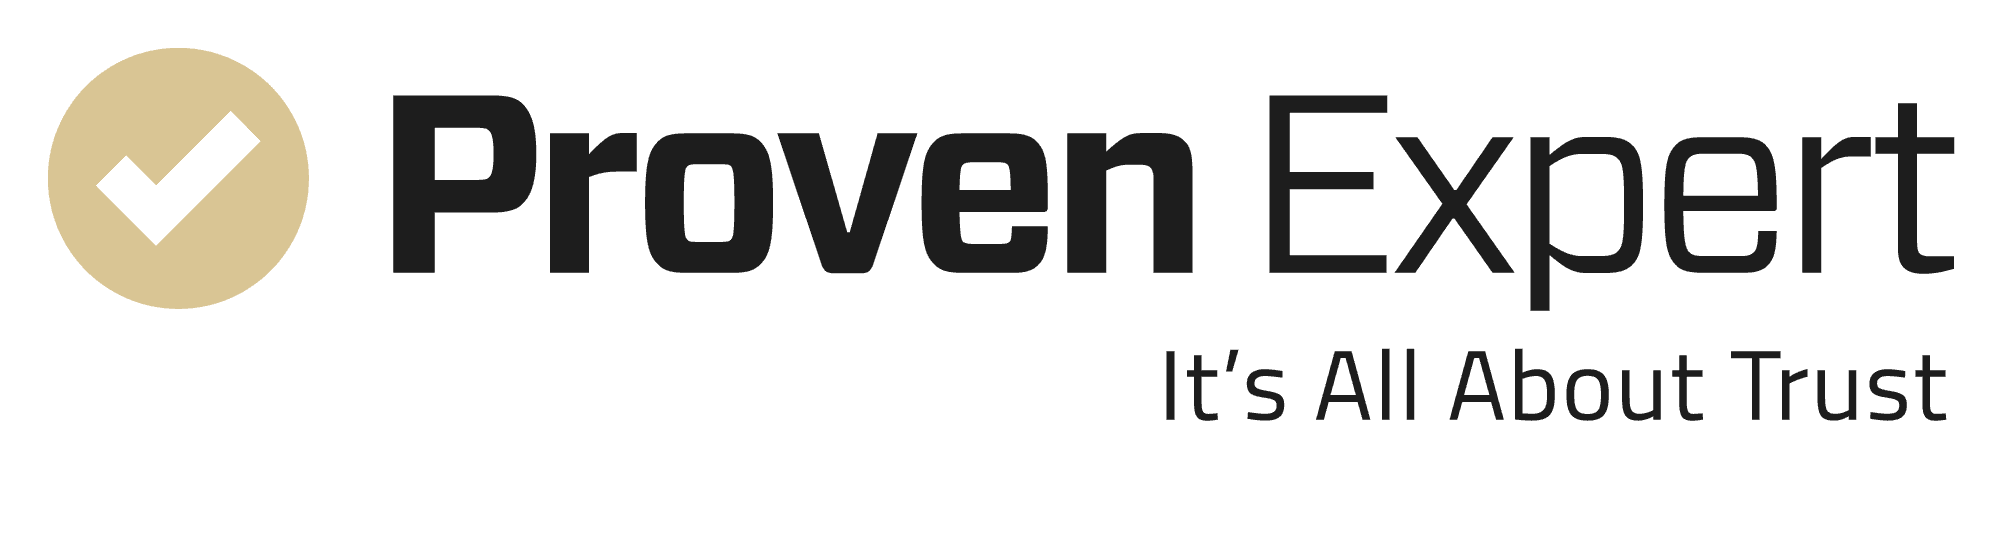 provenexpert-logo-with-claim